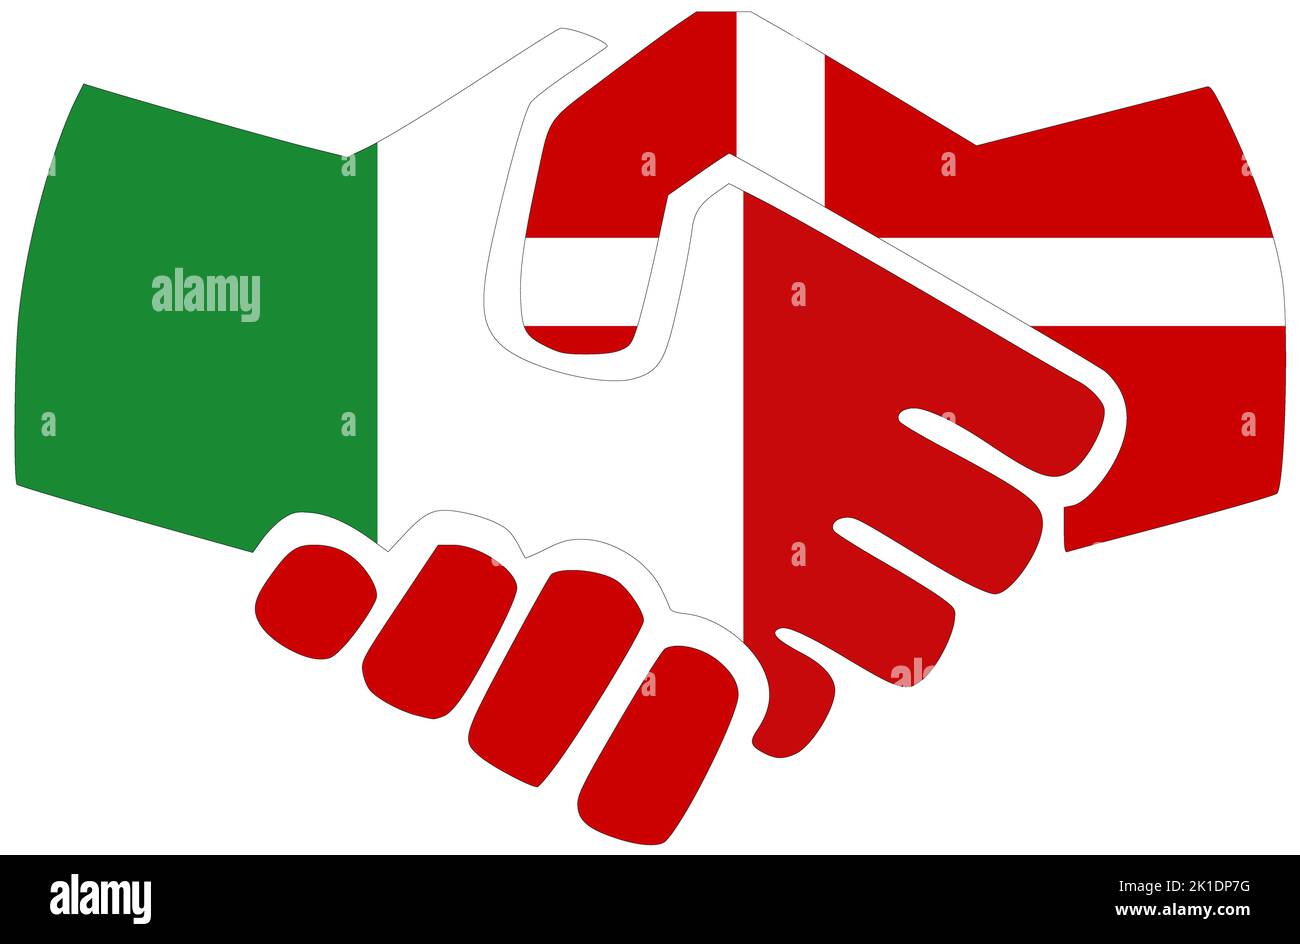 Italy - Denmark : Handshake, symbol of agreement or friendship Stock Photo